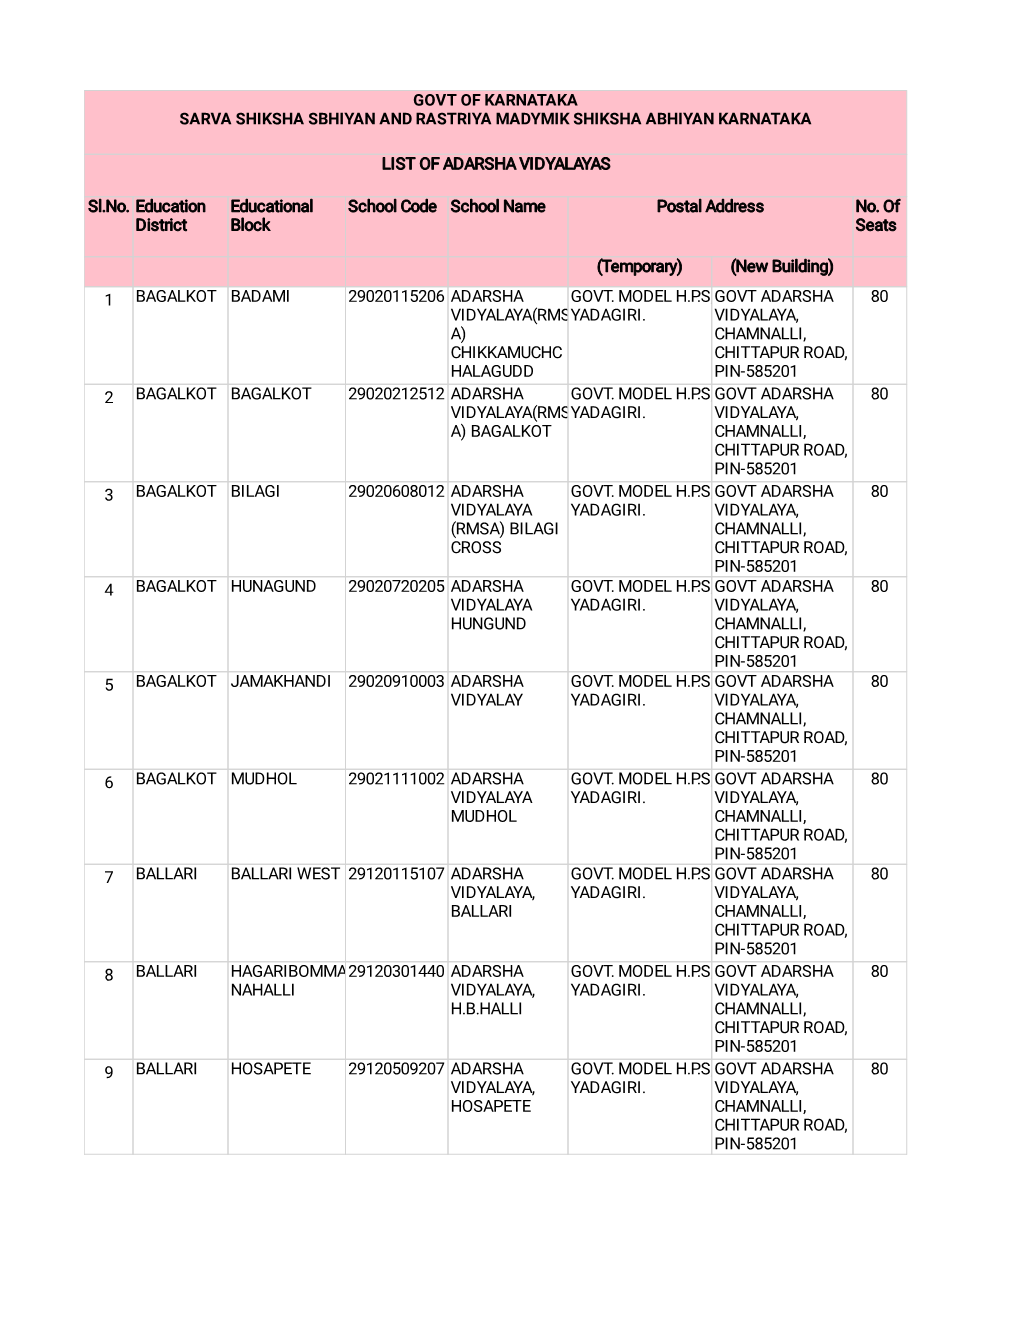 List of Adarsha Vidyalayas